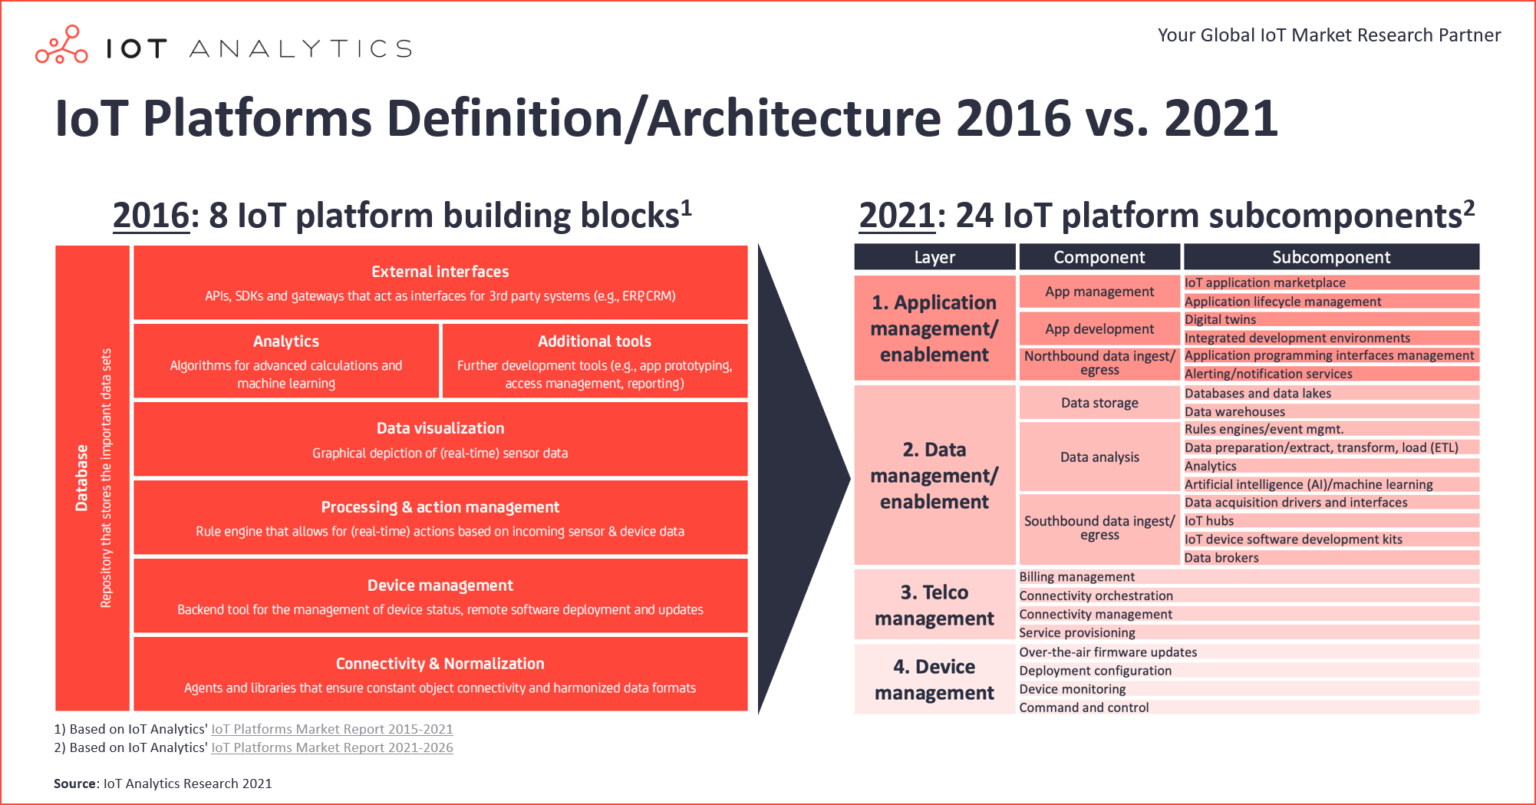 IoT-Platforms-Definition-Architecture-2016-vs-2021-1536x805.png (412 KB)